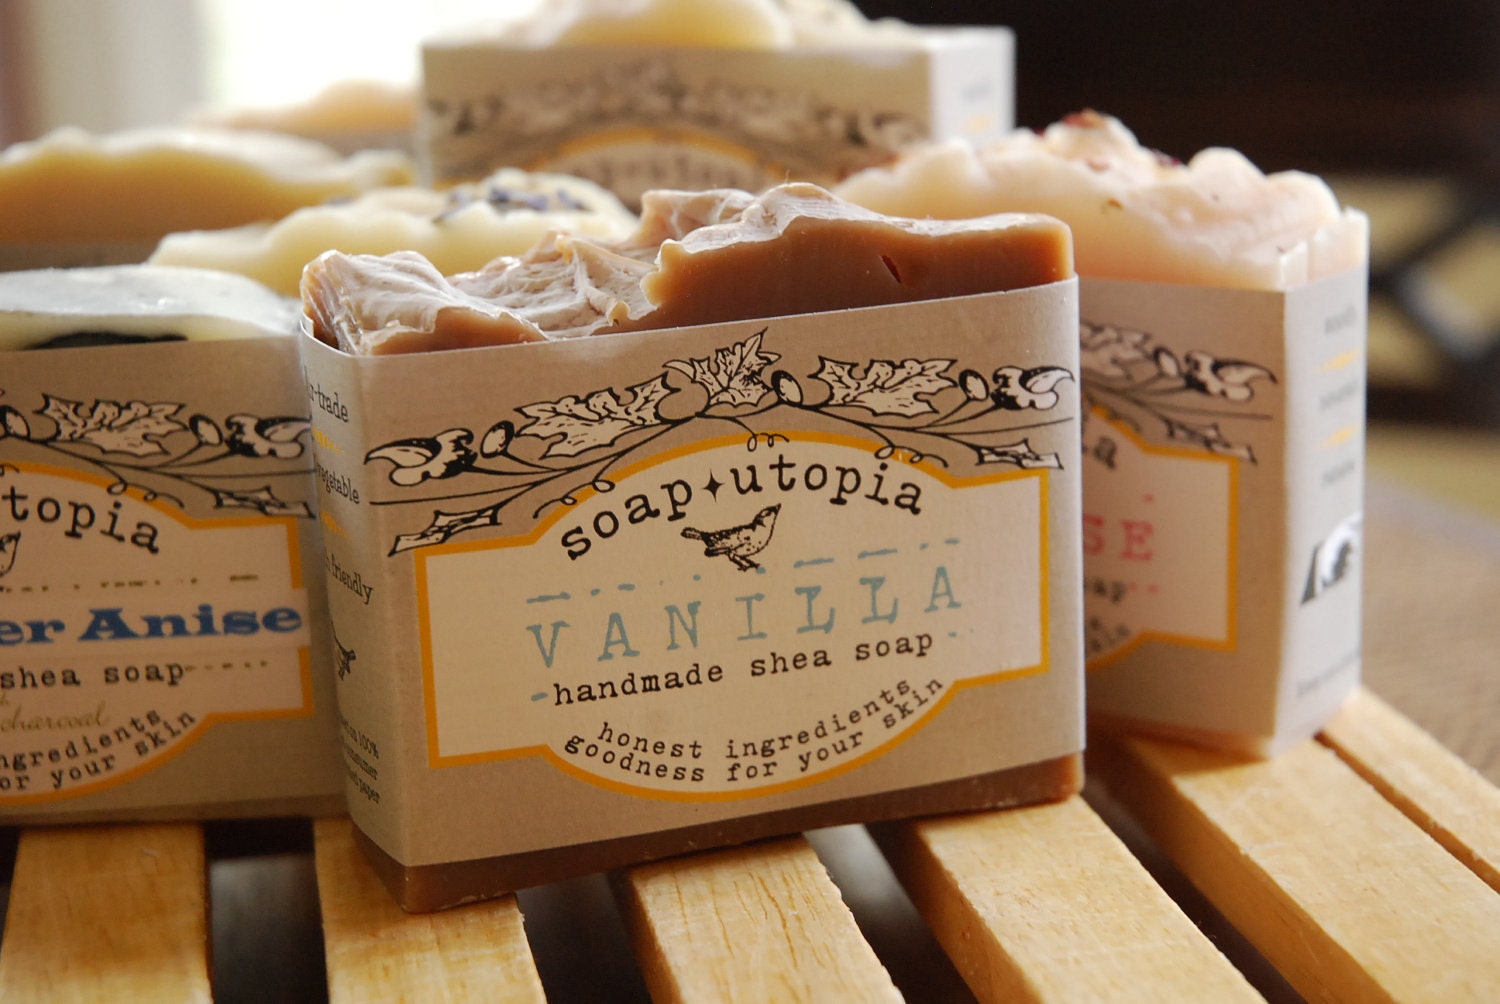 Handmade Vanilla soap - 4 oz. cold process - smooth vanilla with a soft, dreamy finish